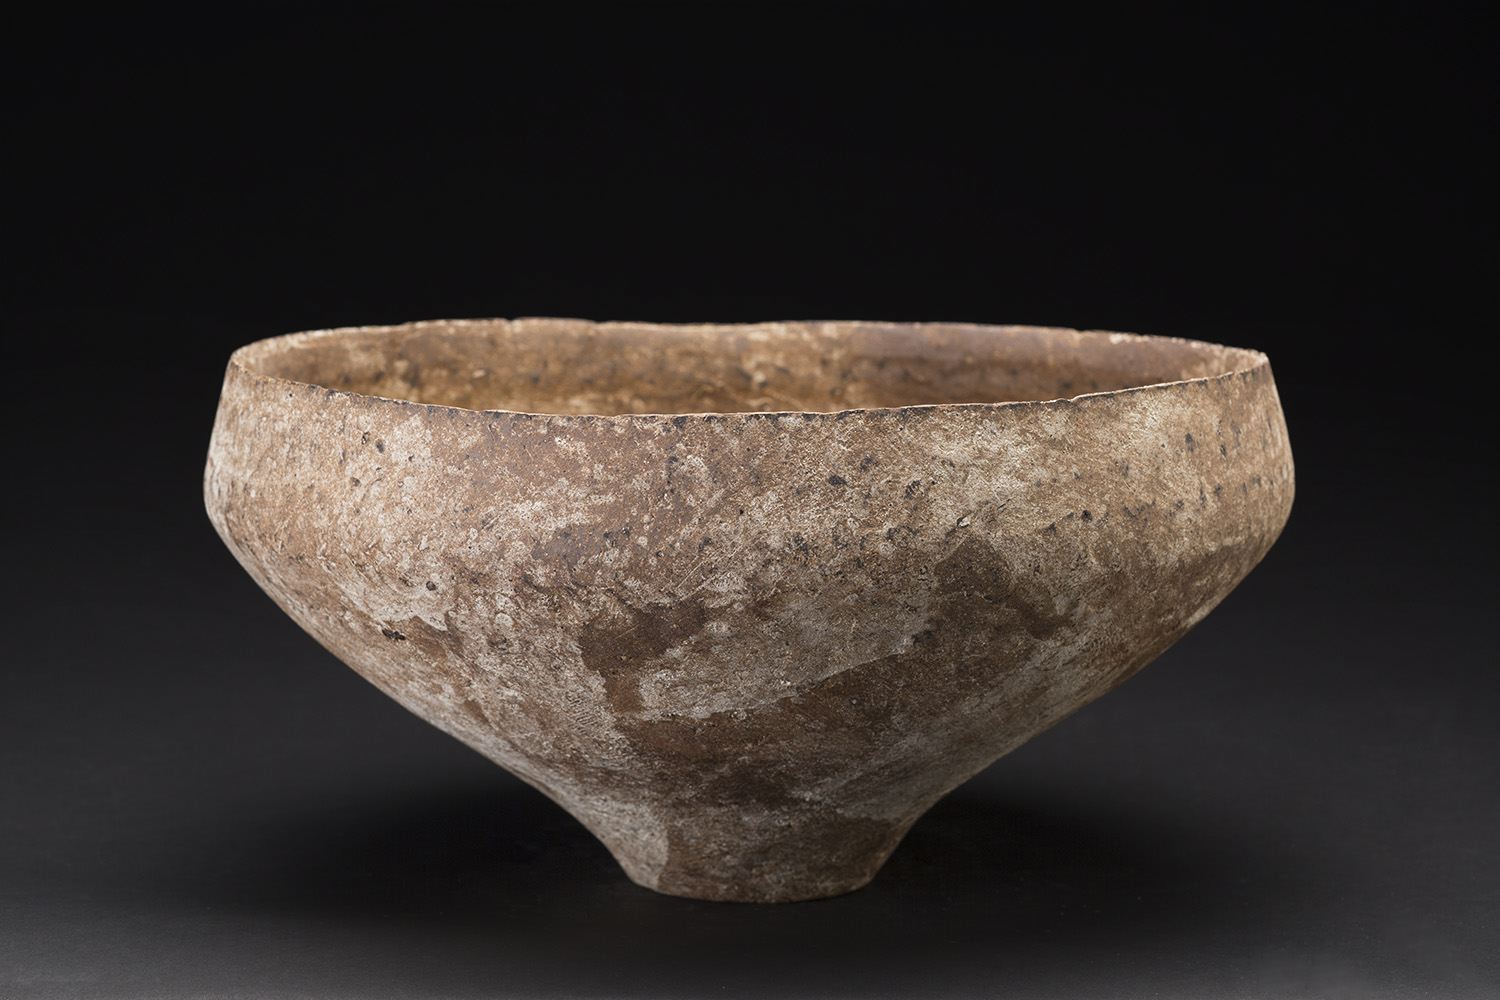   Akihiro Nikaido    Bowl  , 2015 Ceramic 6.25 x 12 x 12 inches 15.9 x 30.5 x 30.5 cm ANk 8 